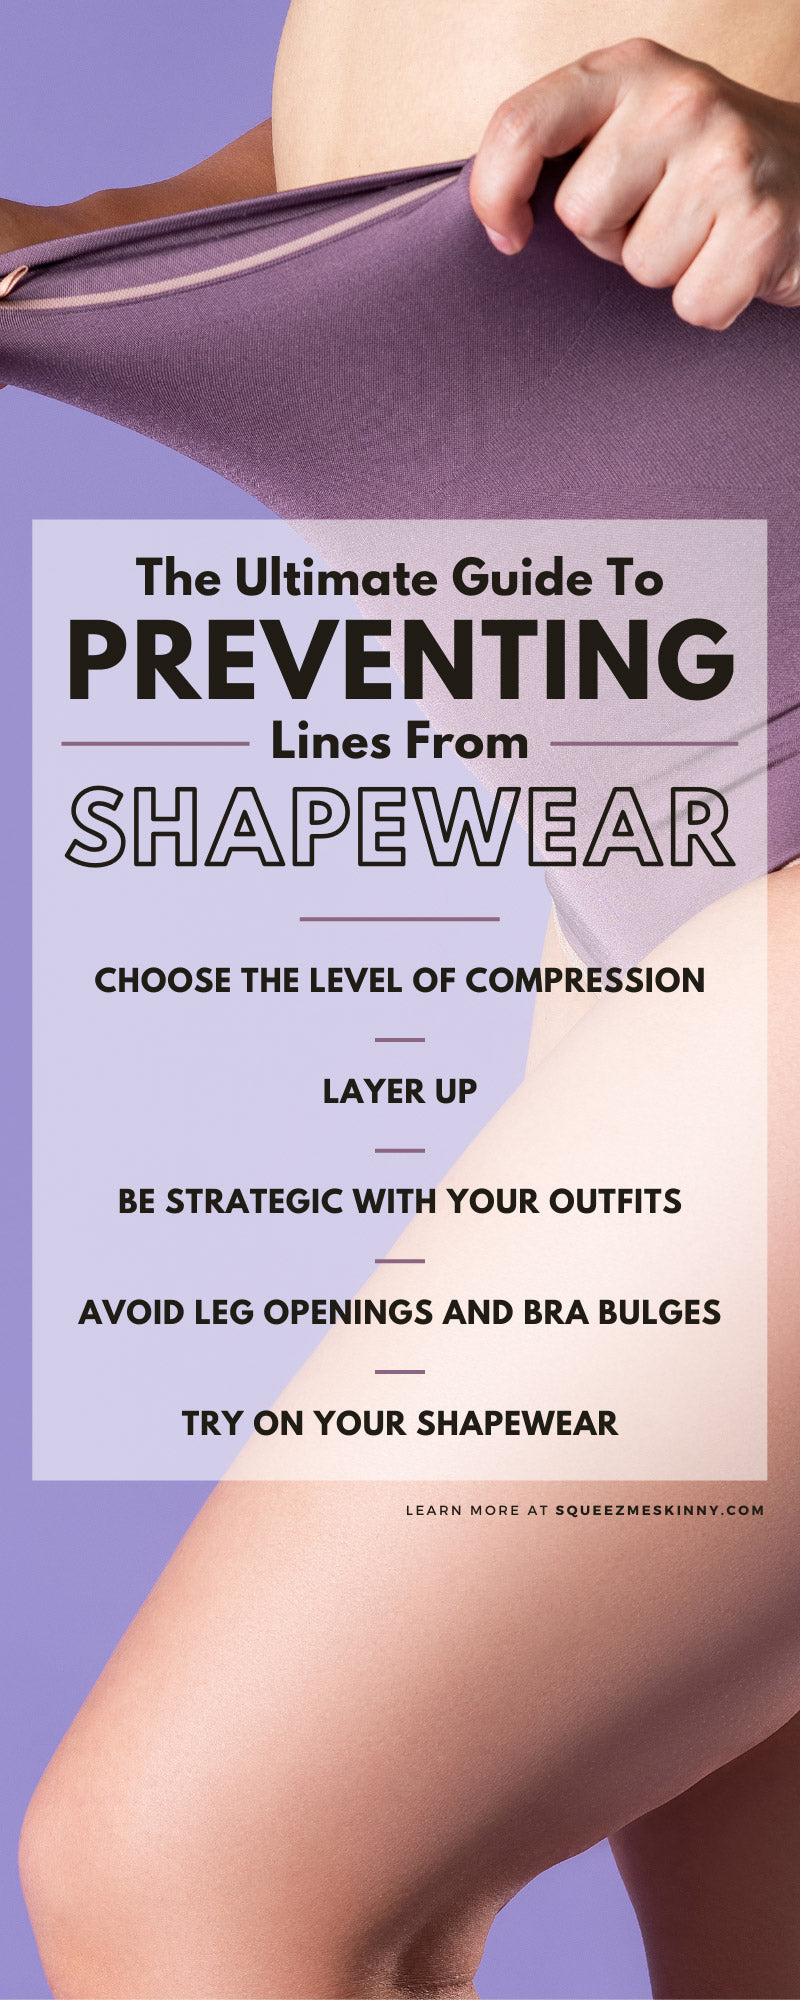 How do I choose shapewear?